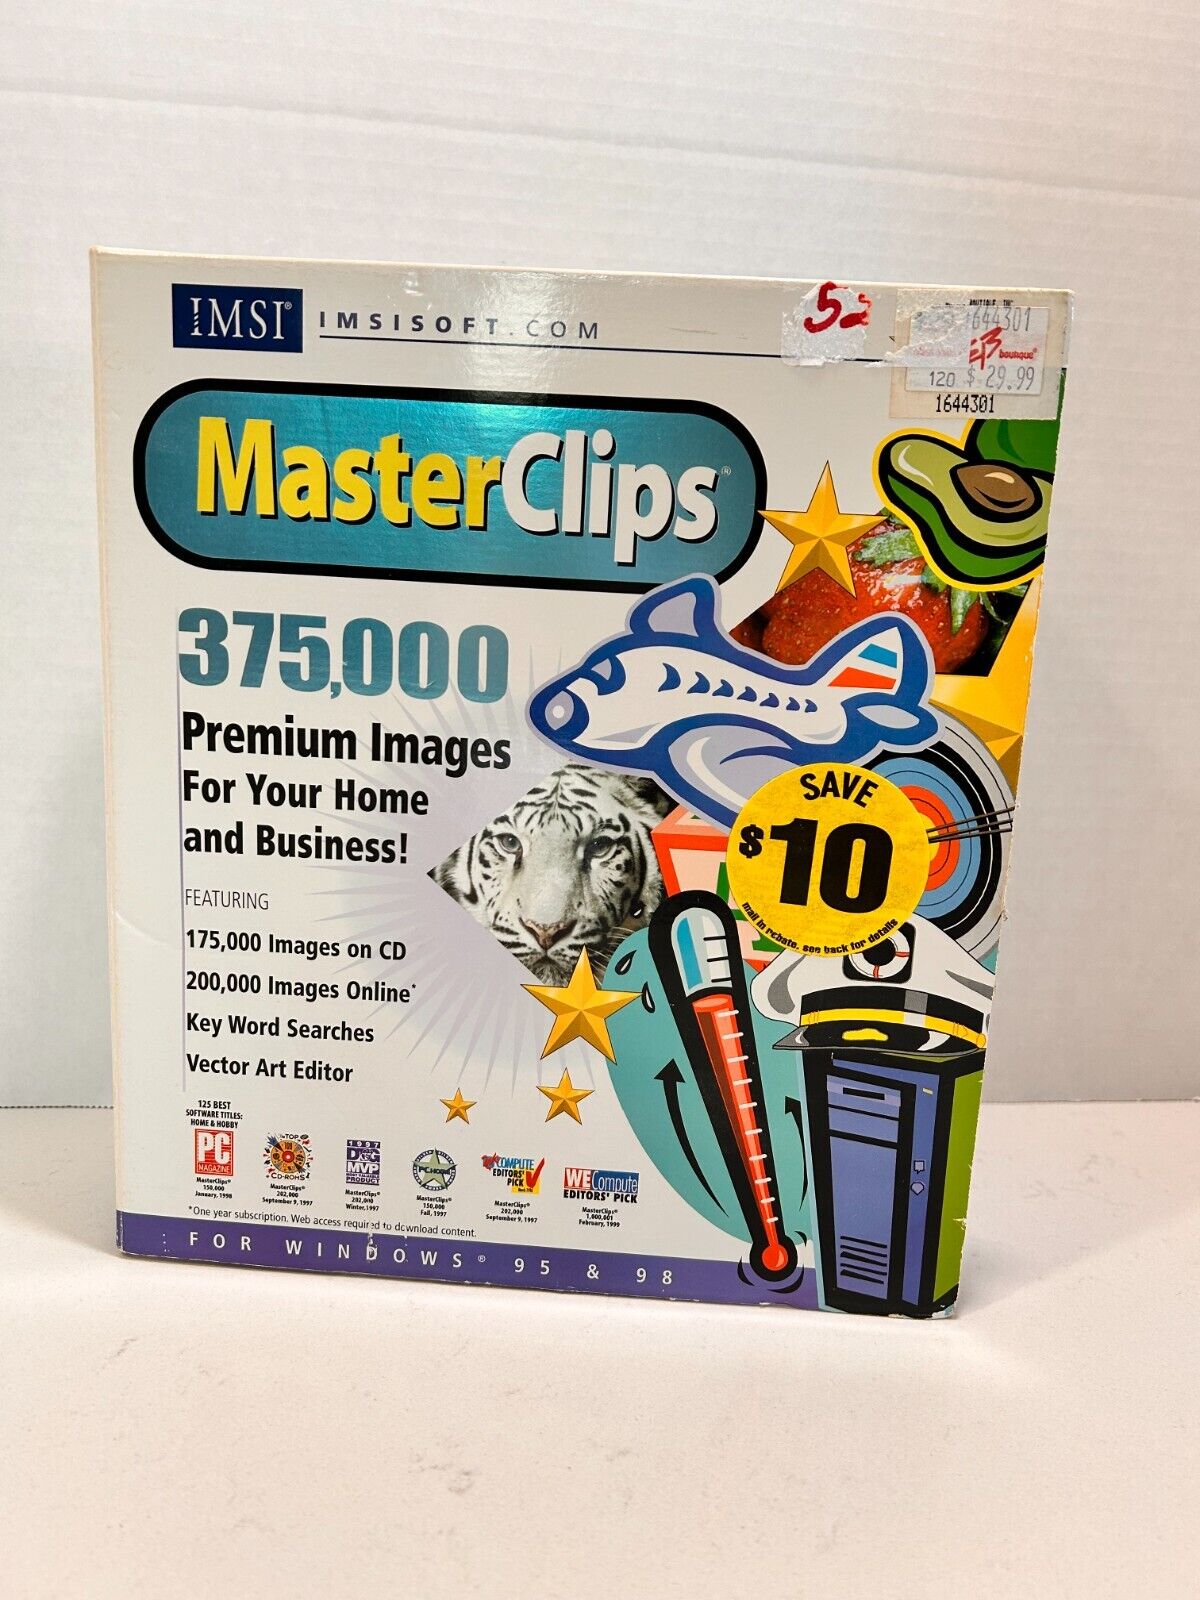 IMSI Masterclips 375,000 Software W/ Image Catalogue & Instructions